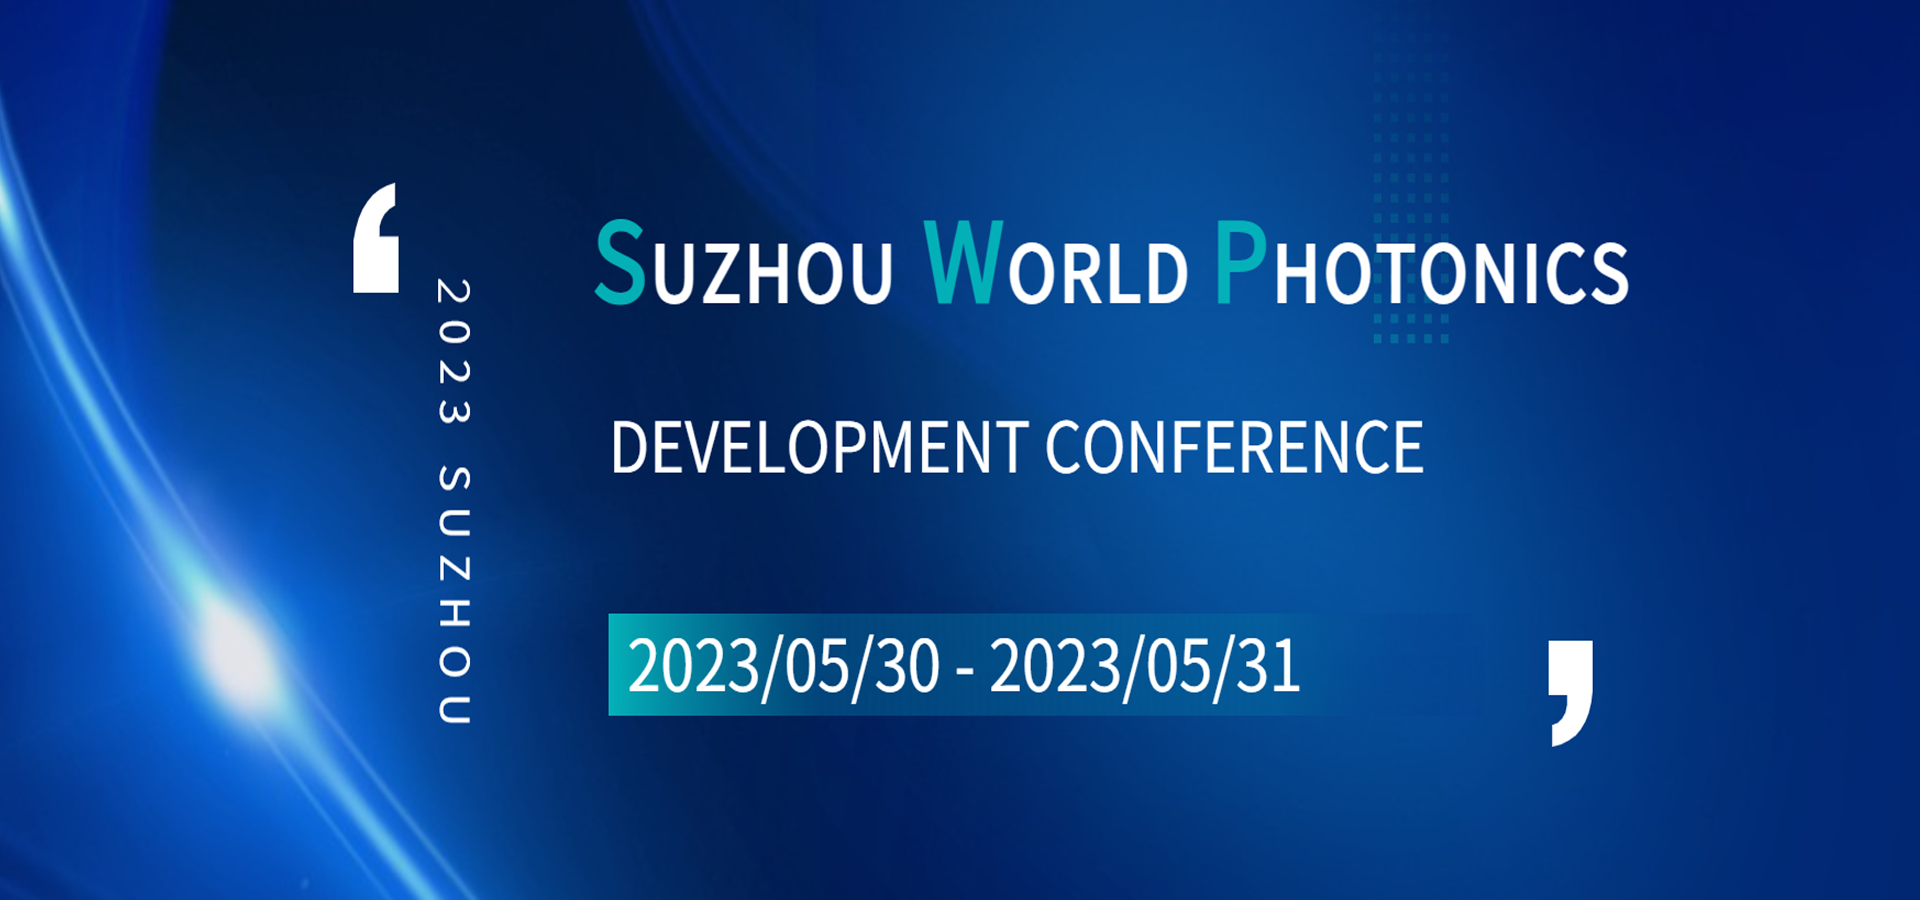 2023 China (Suzhou) World Photonics Industry Development Conference ga-enwe na Suzhou na njedebe nke May.